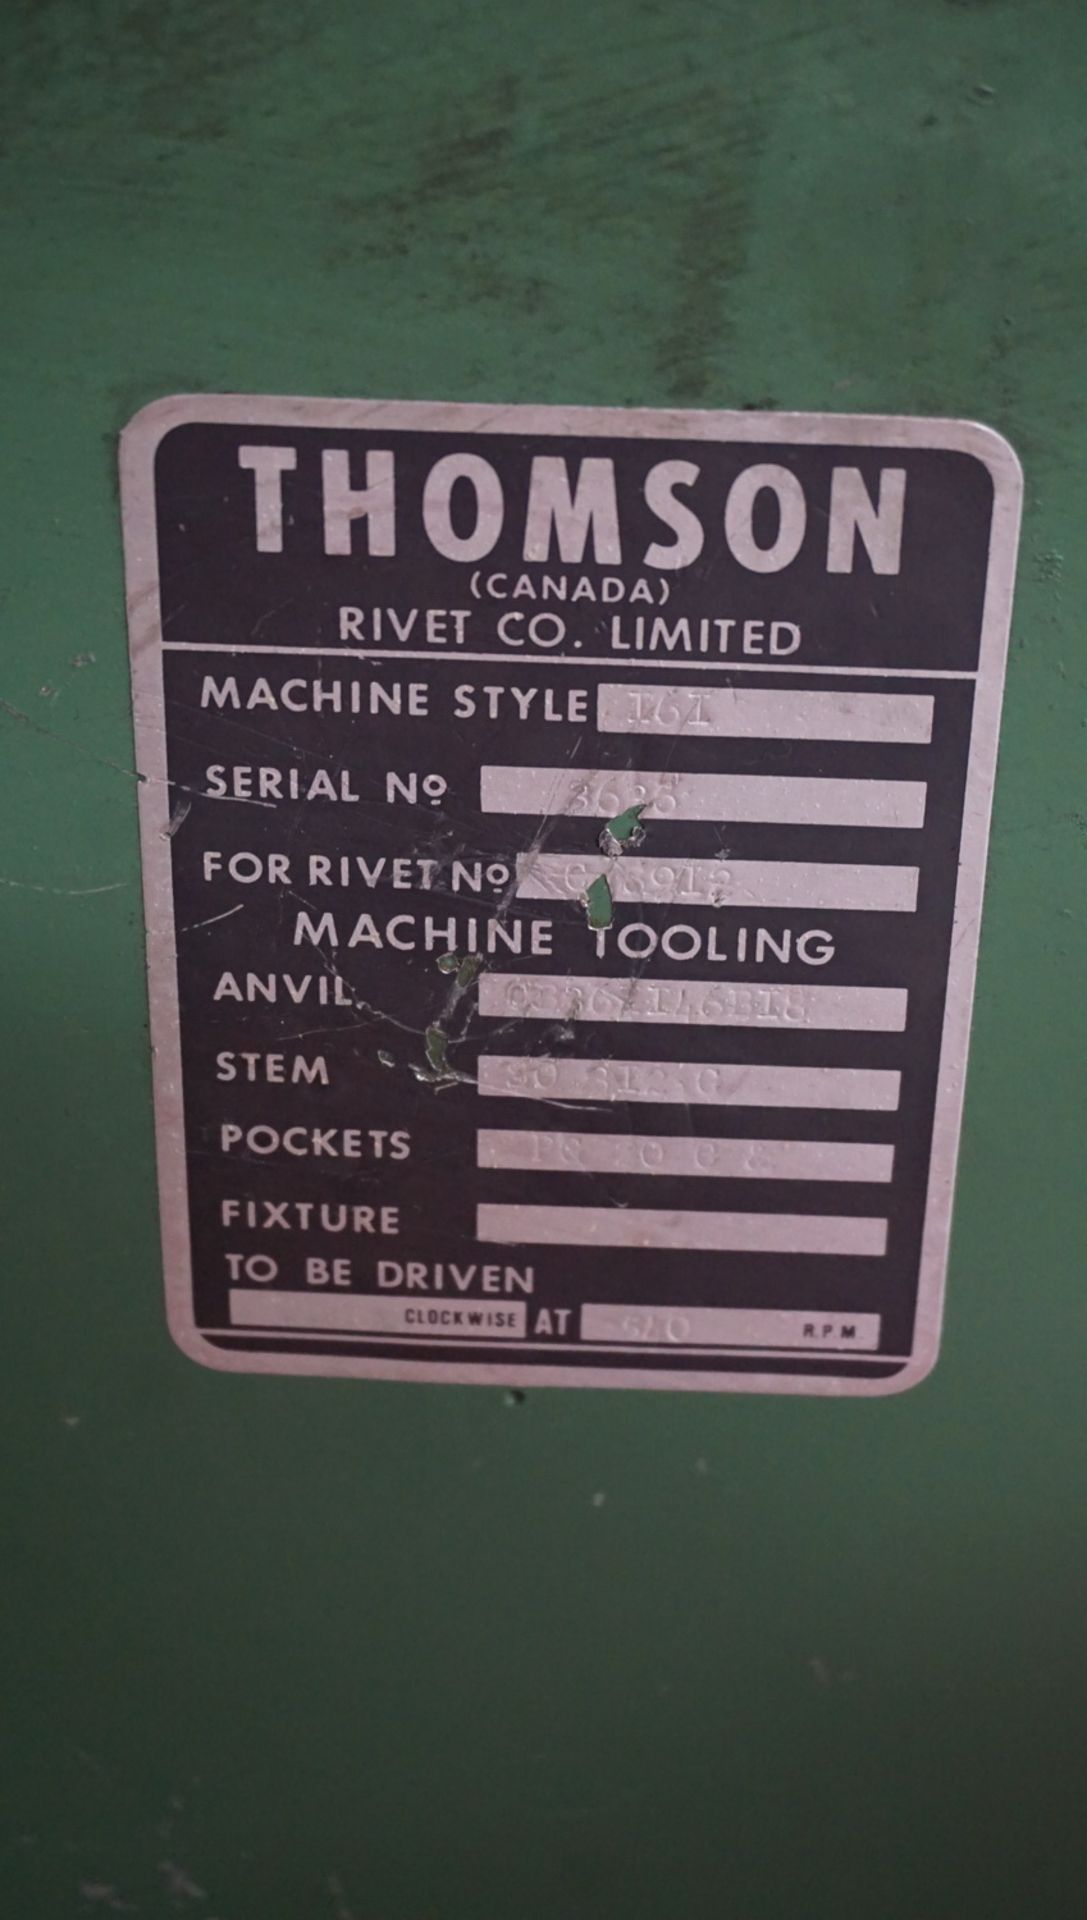 THOMSON 161 PEDESTAL RIVETING MACHINE W/ ROCKFORD RKC-001 DETECT-A-FINGER SAFETY - Image 5 of 5